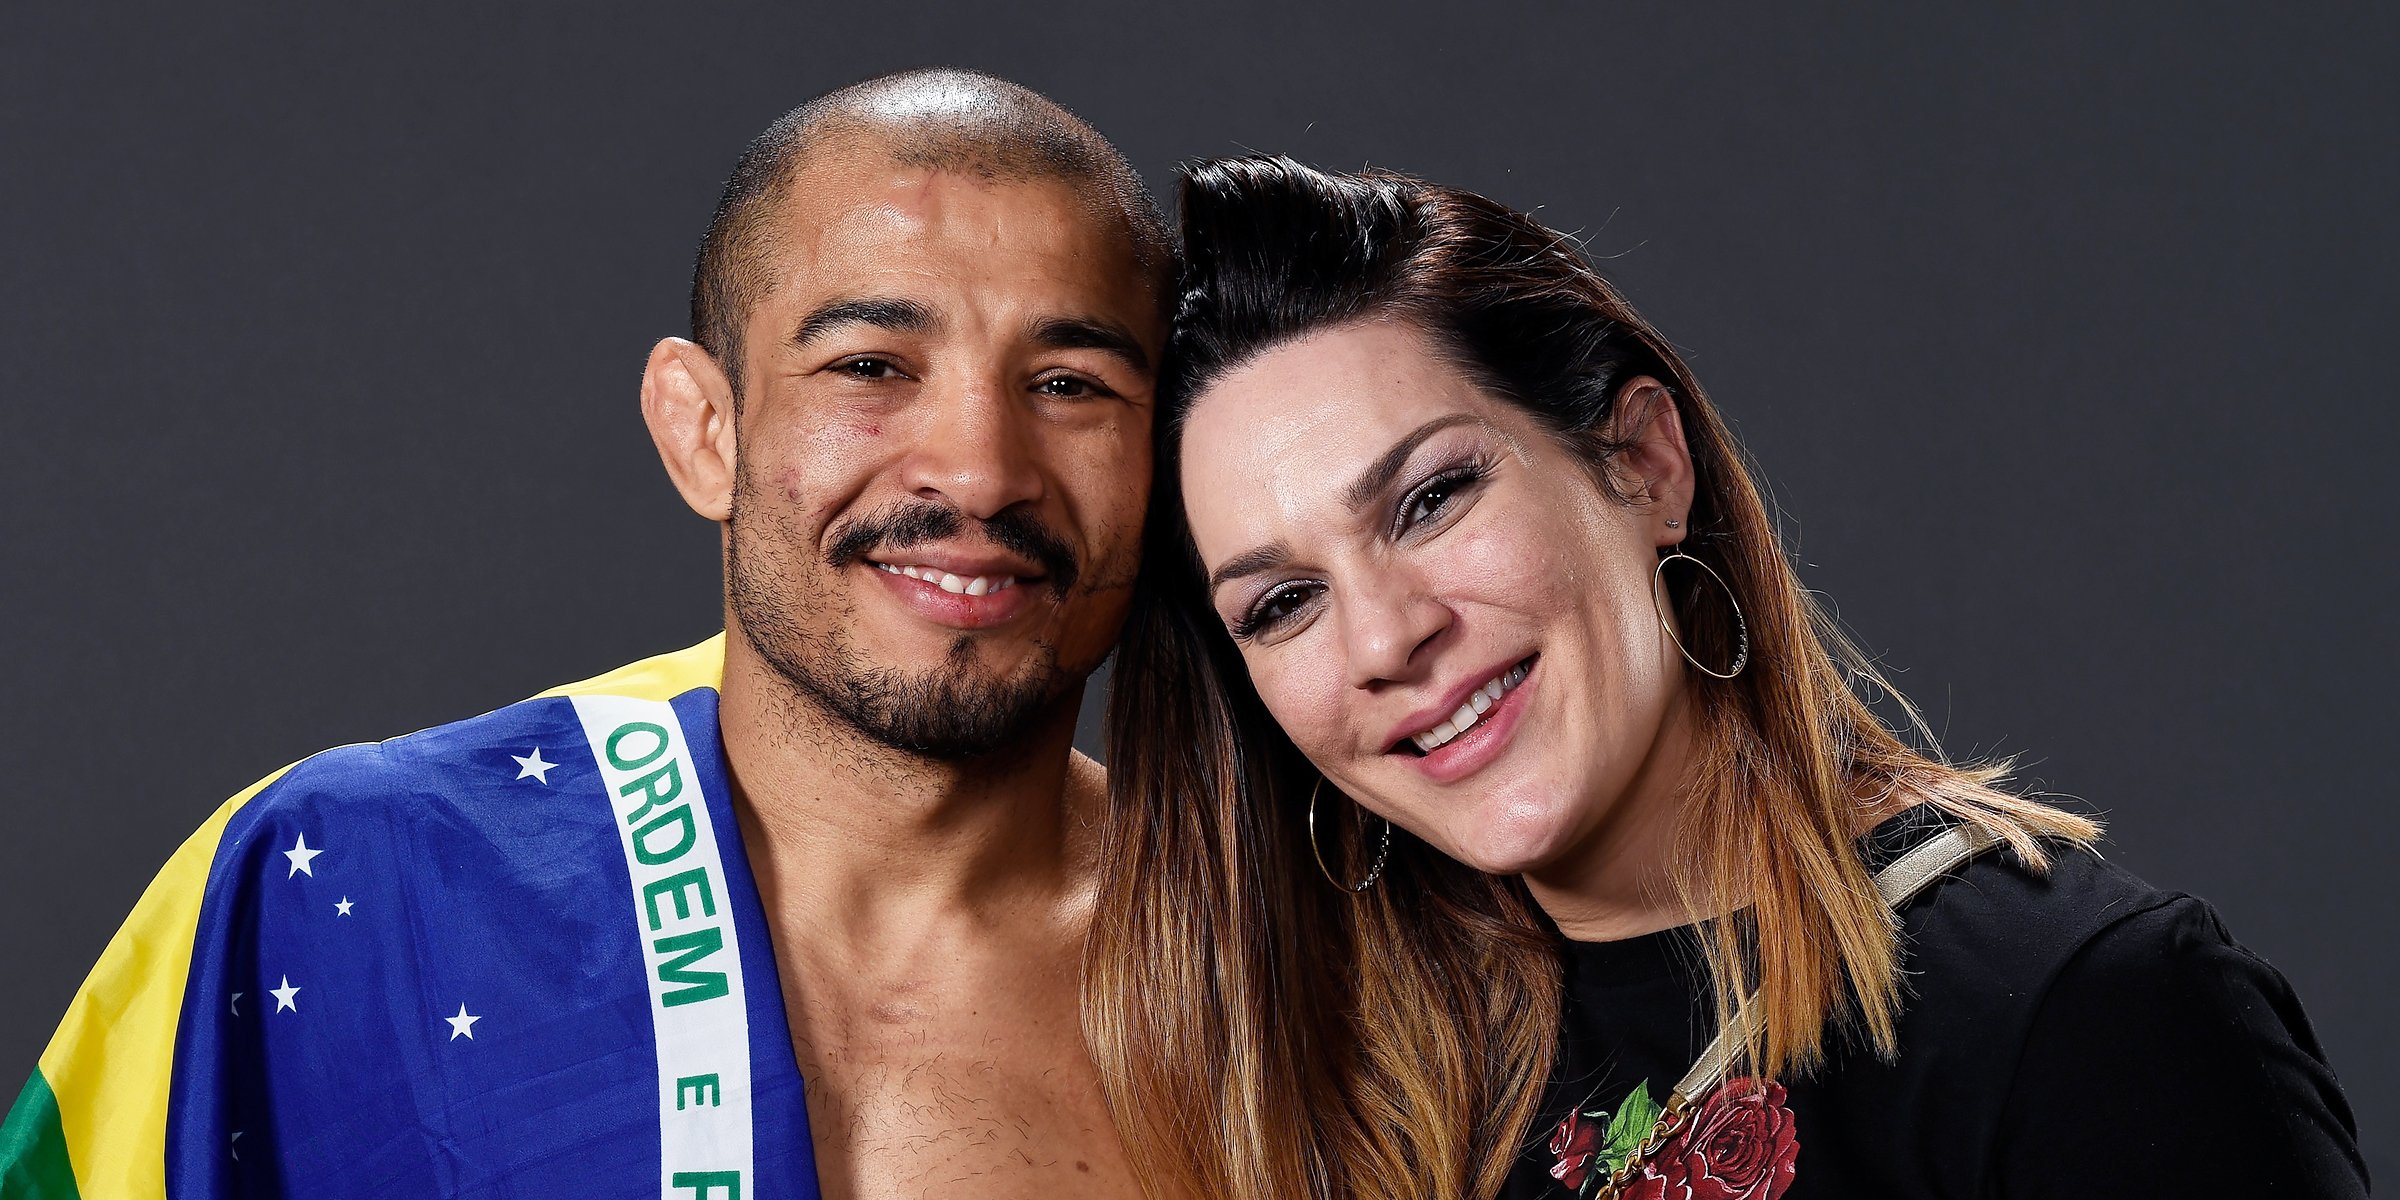 Jose Aldo and Vivianne Aldo | Getty Images